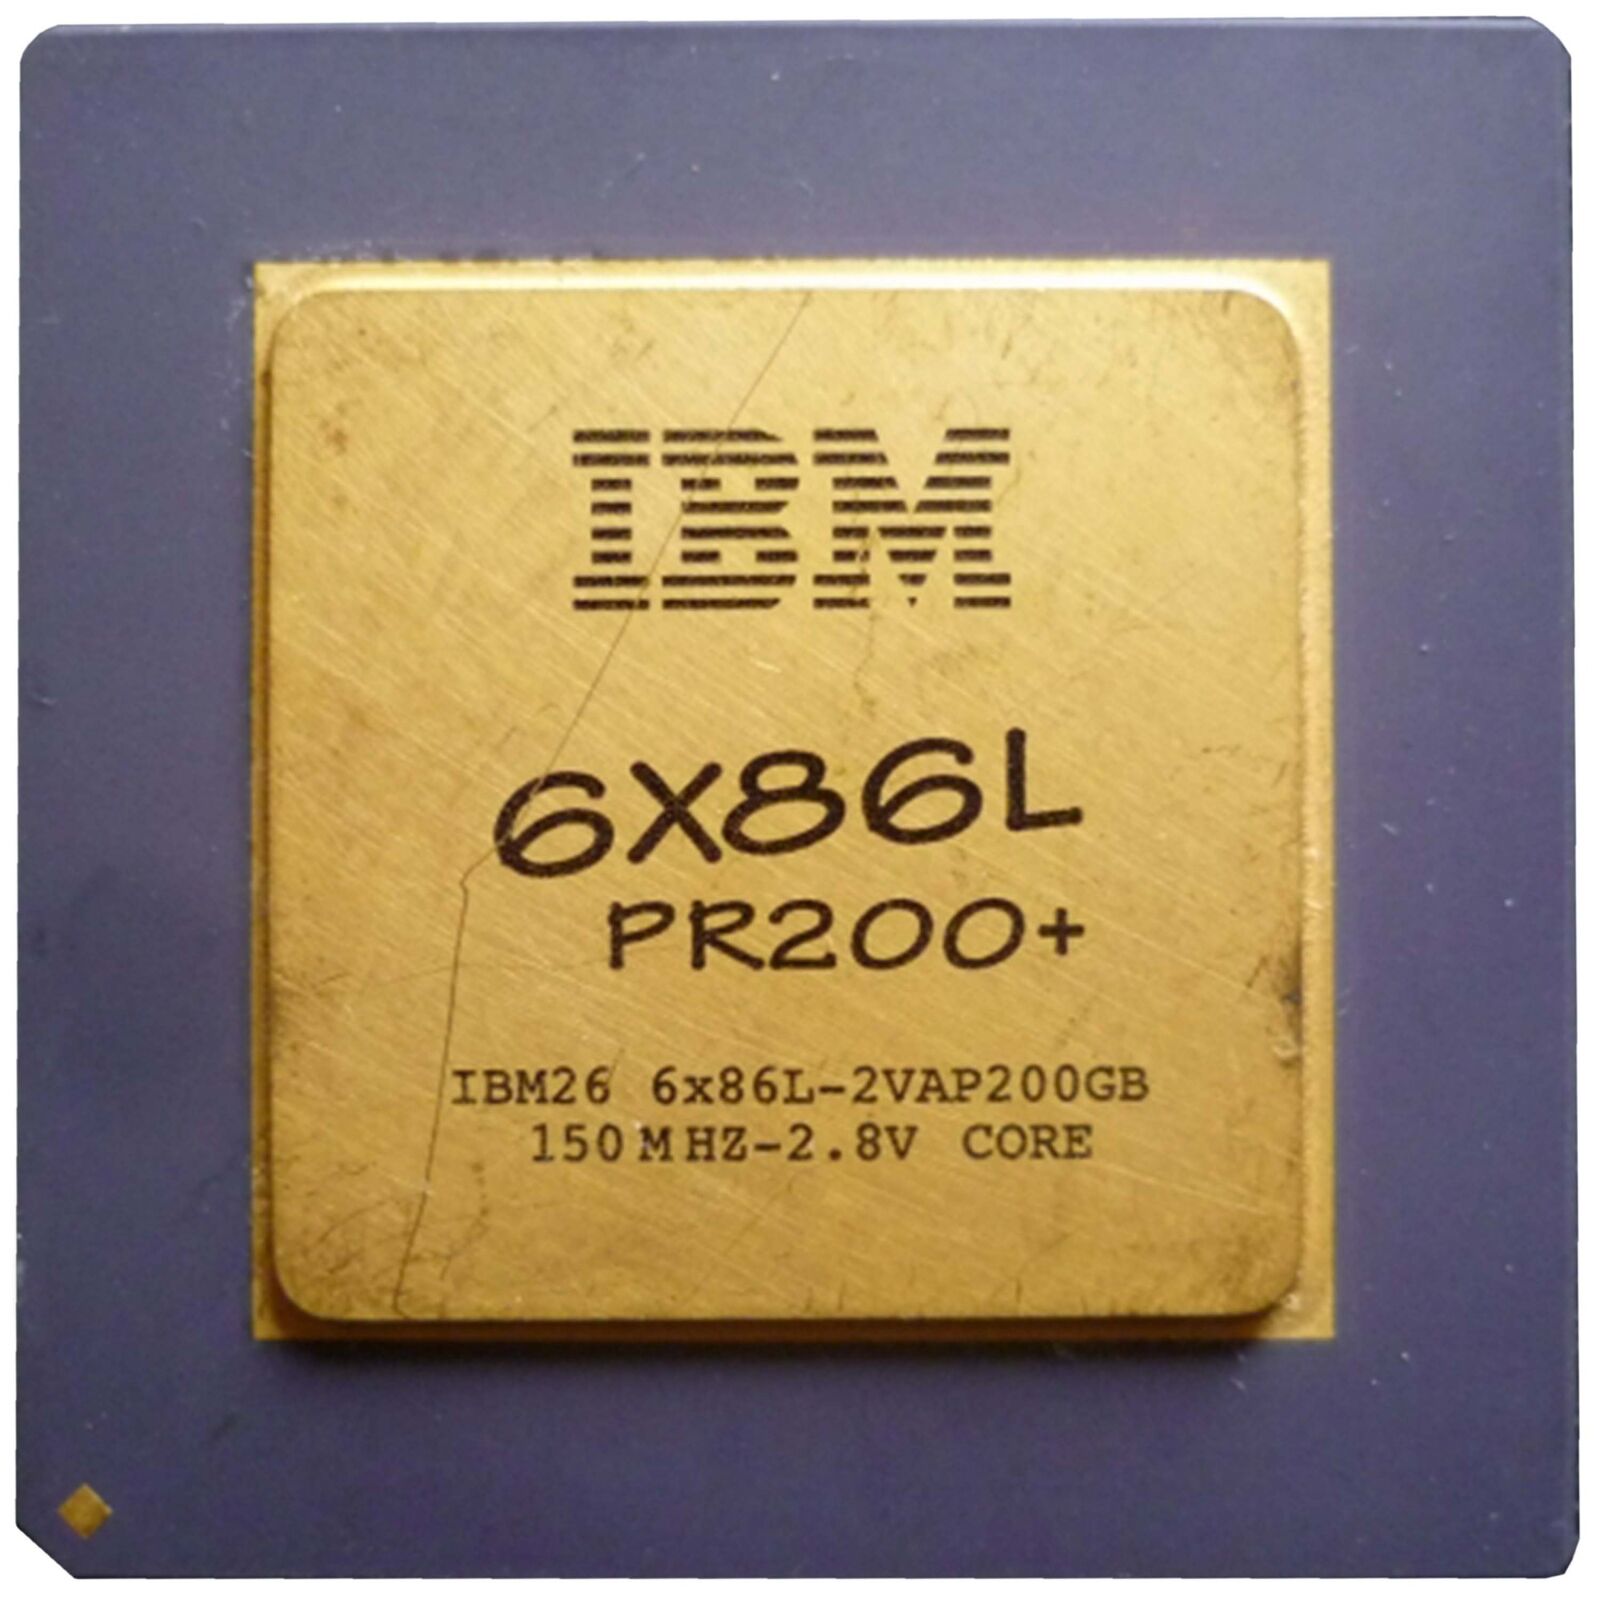 IBM PC CPU PGA321 Socket 7 6X86L PR200+150MHZ 2VAP200GB CPU Processor Vintage